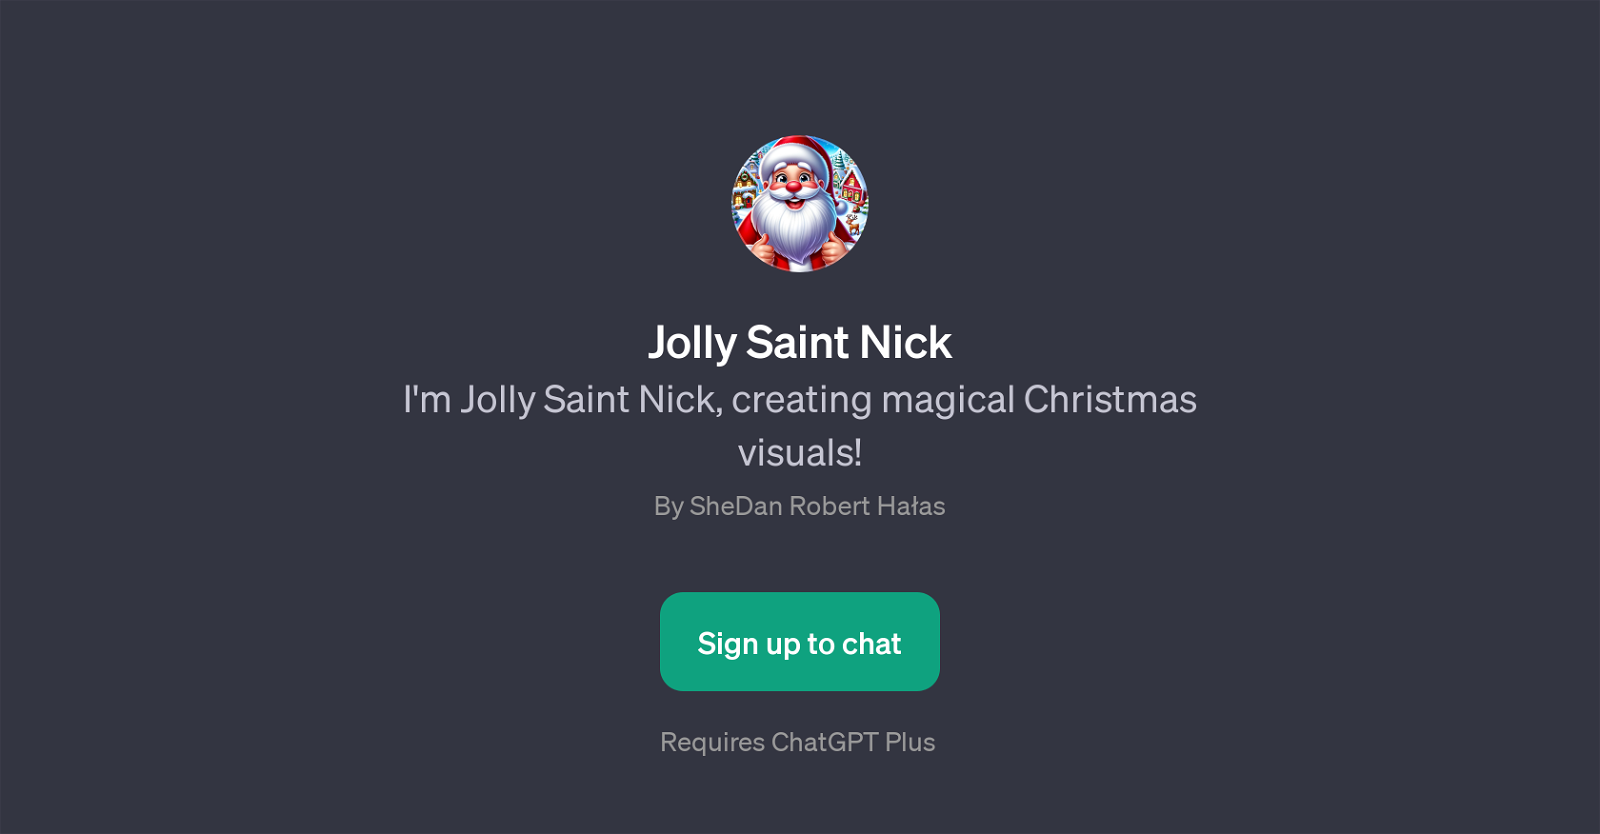 Jolly Saint Nick website